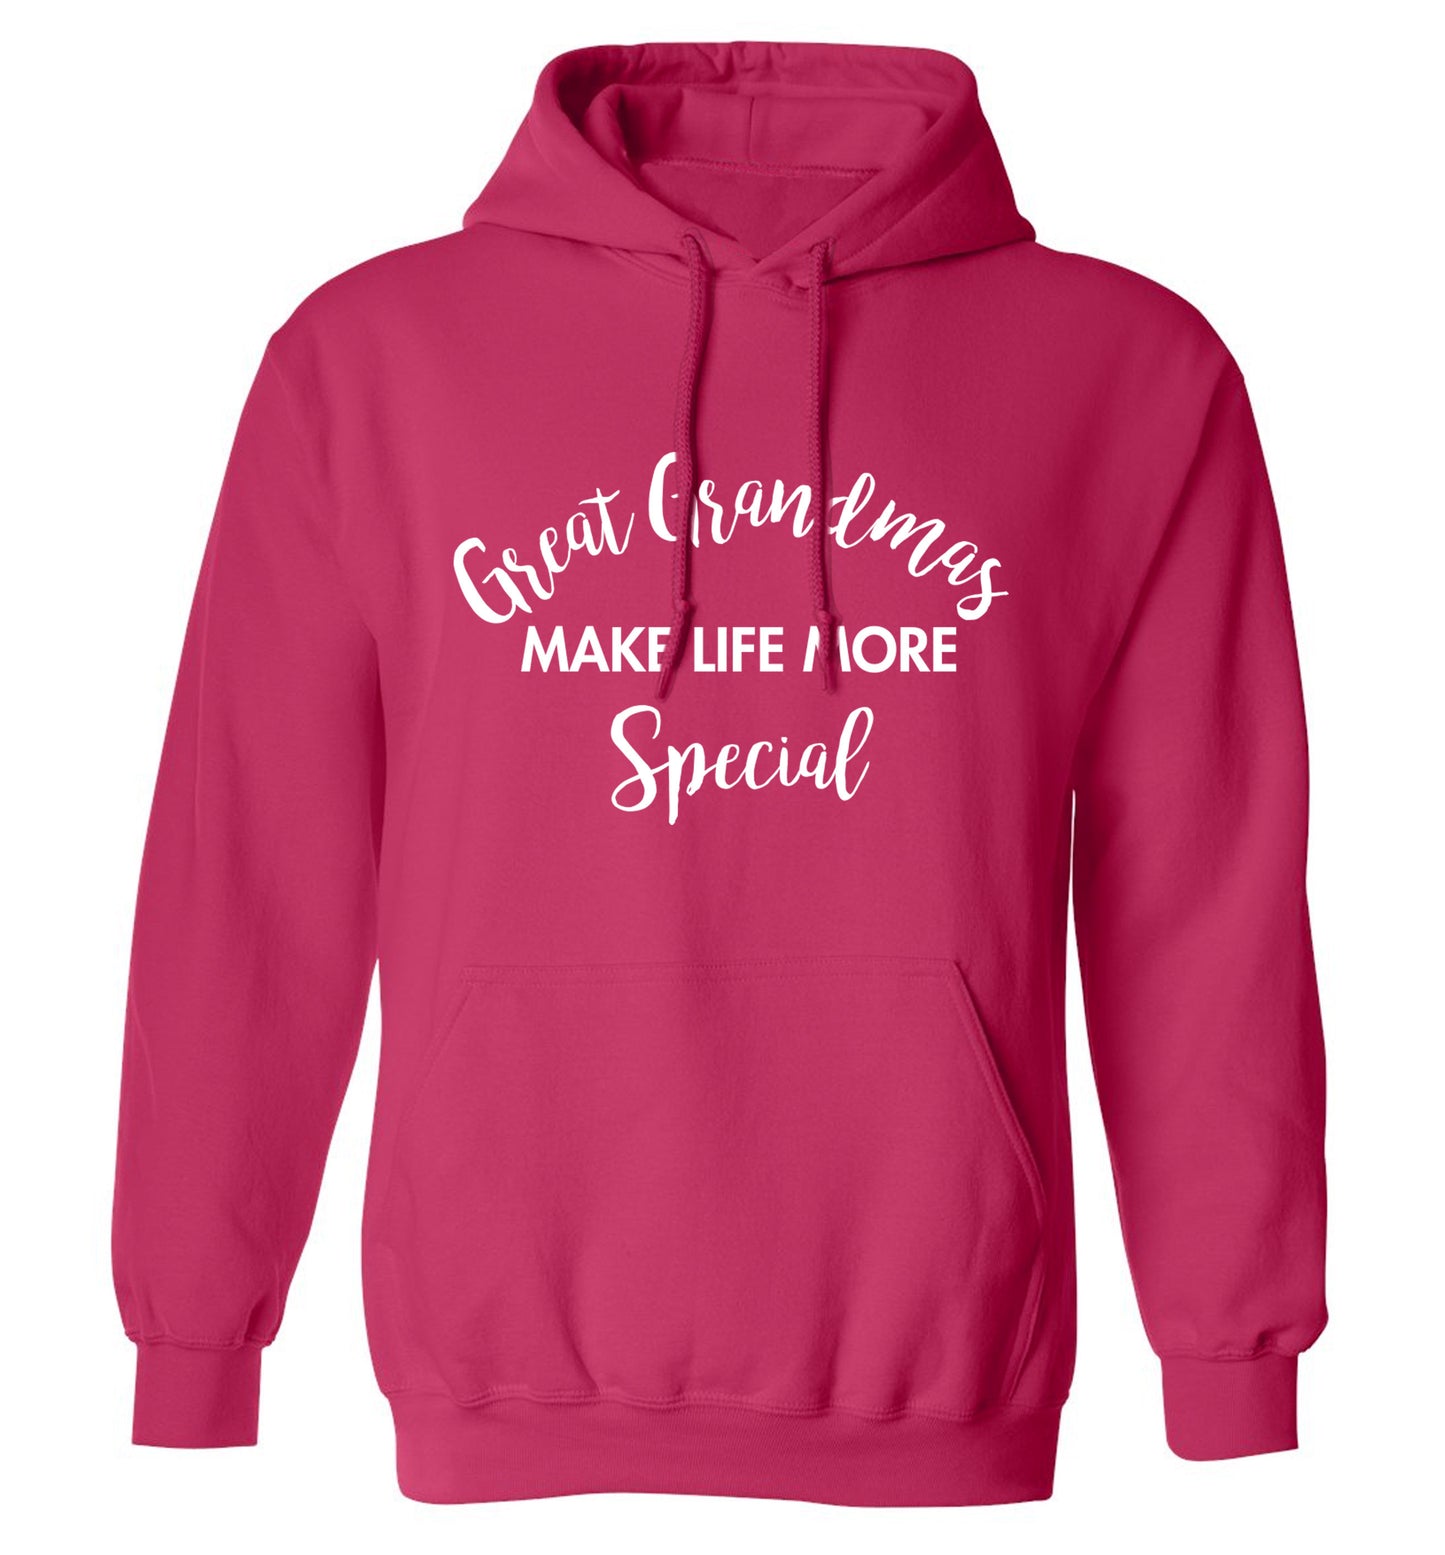 Great Grandmas make life more special adults unisex pink hoodie 2XL